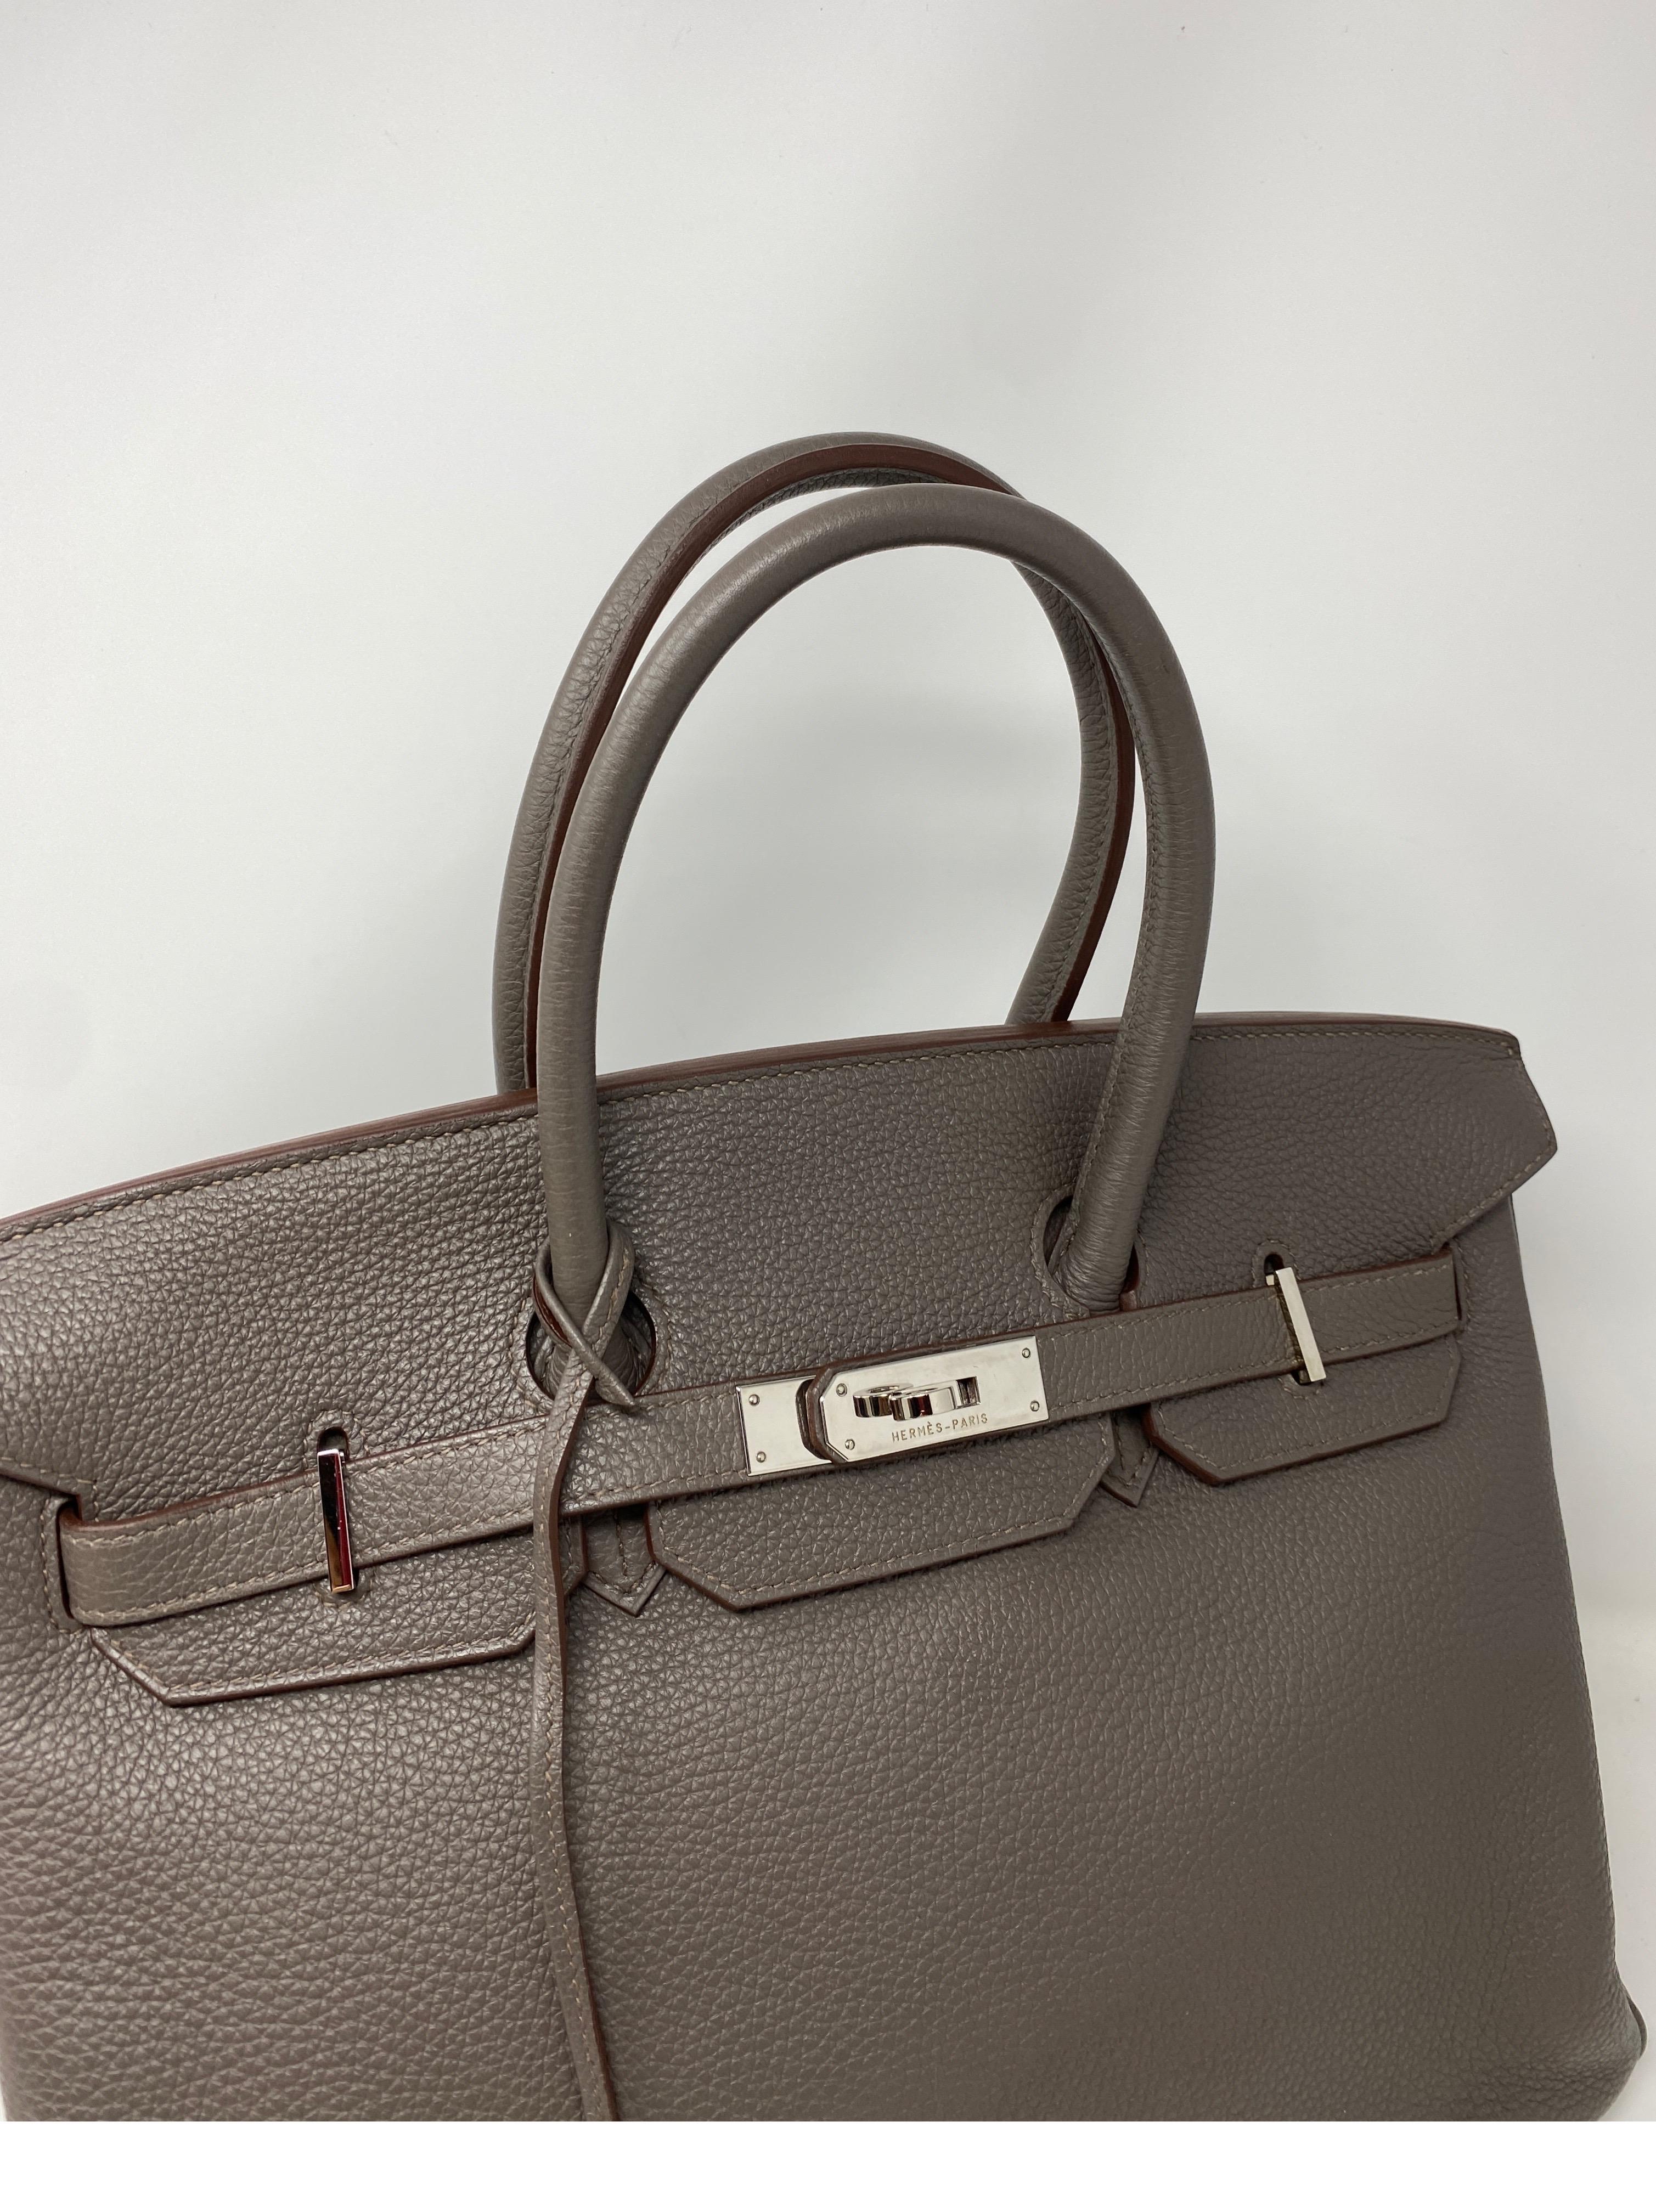 Hermes Birkin 35 Etain Togo Leather Bag  5